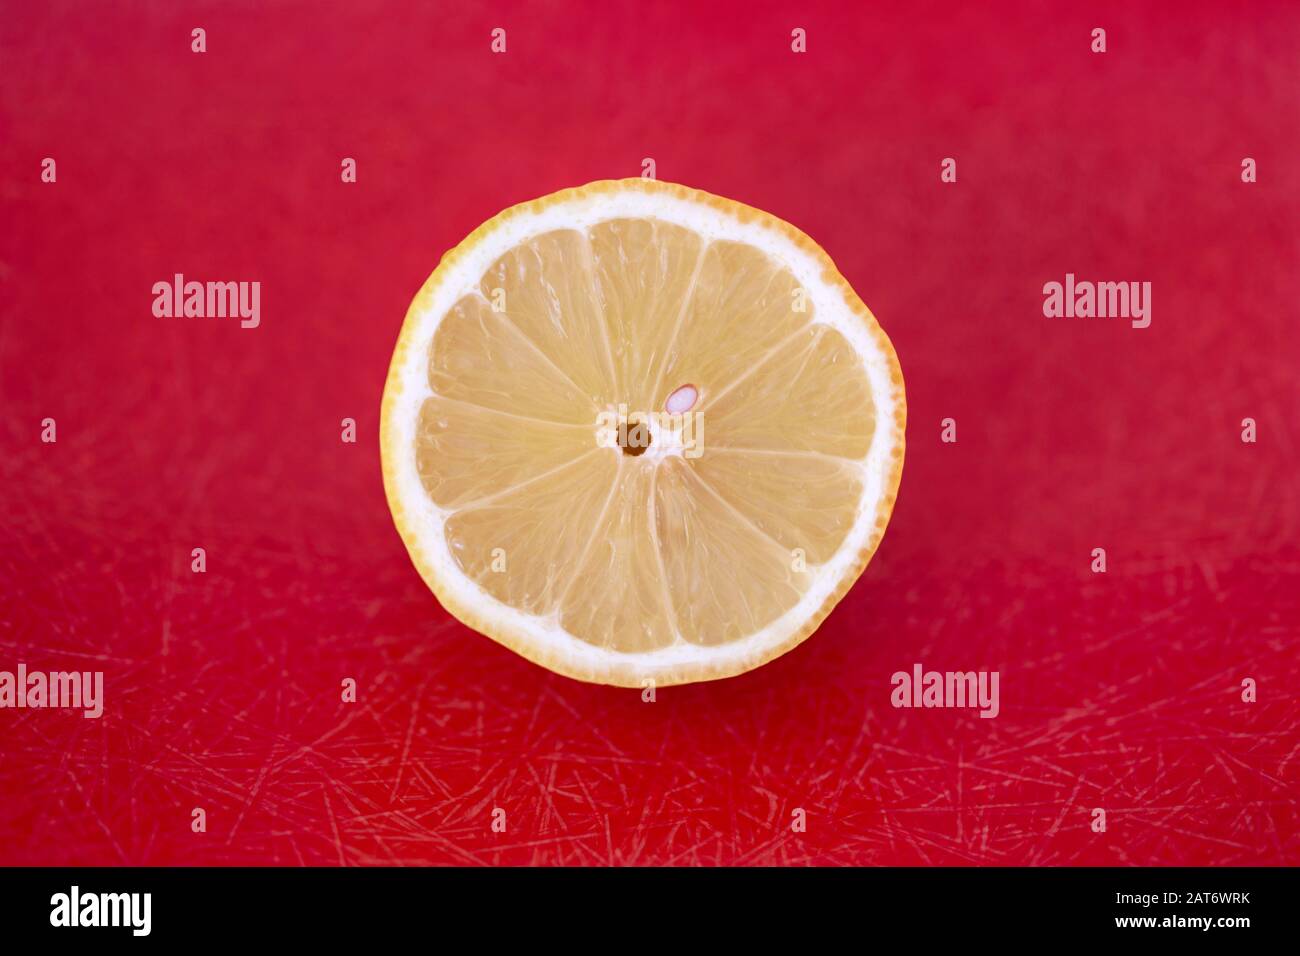 cut lemon close-up on red background Stock Photo